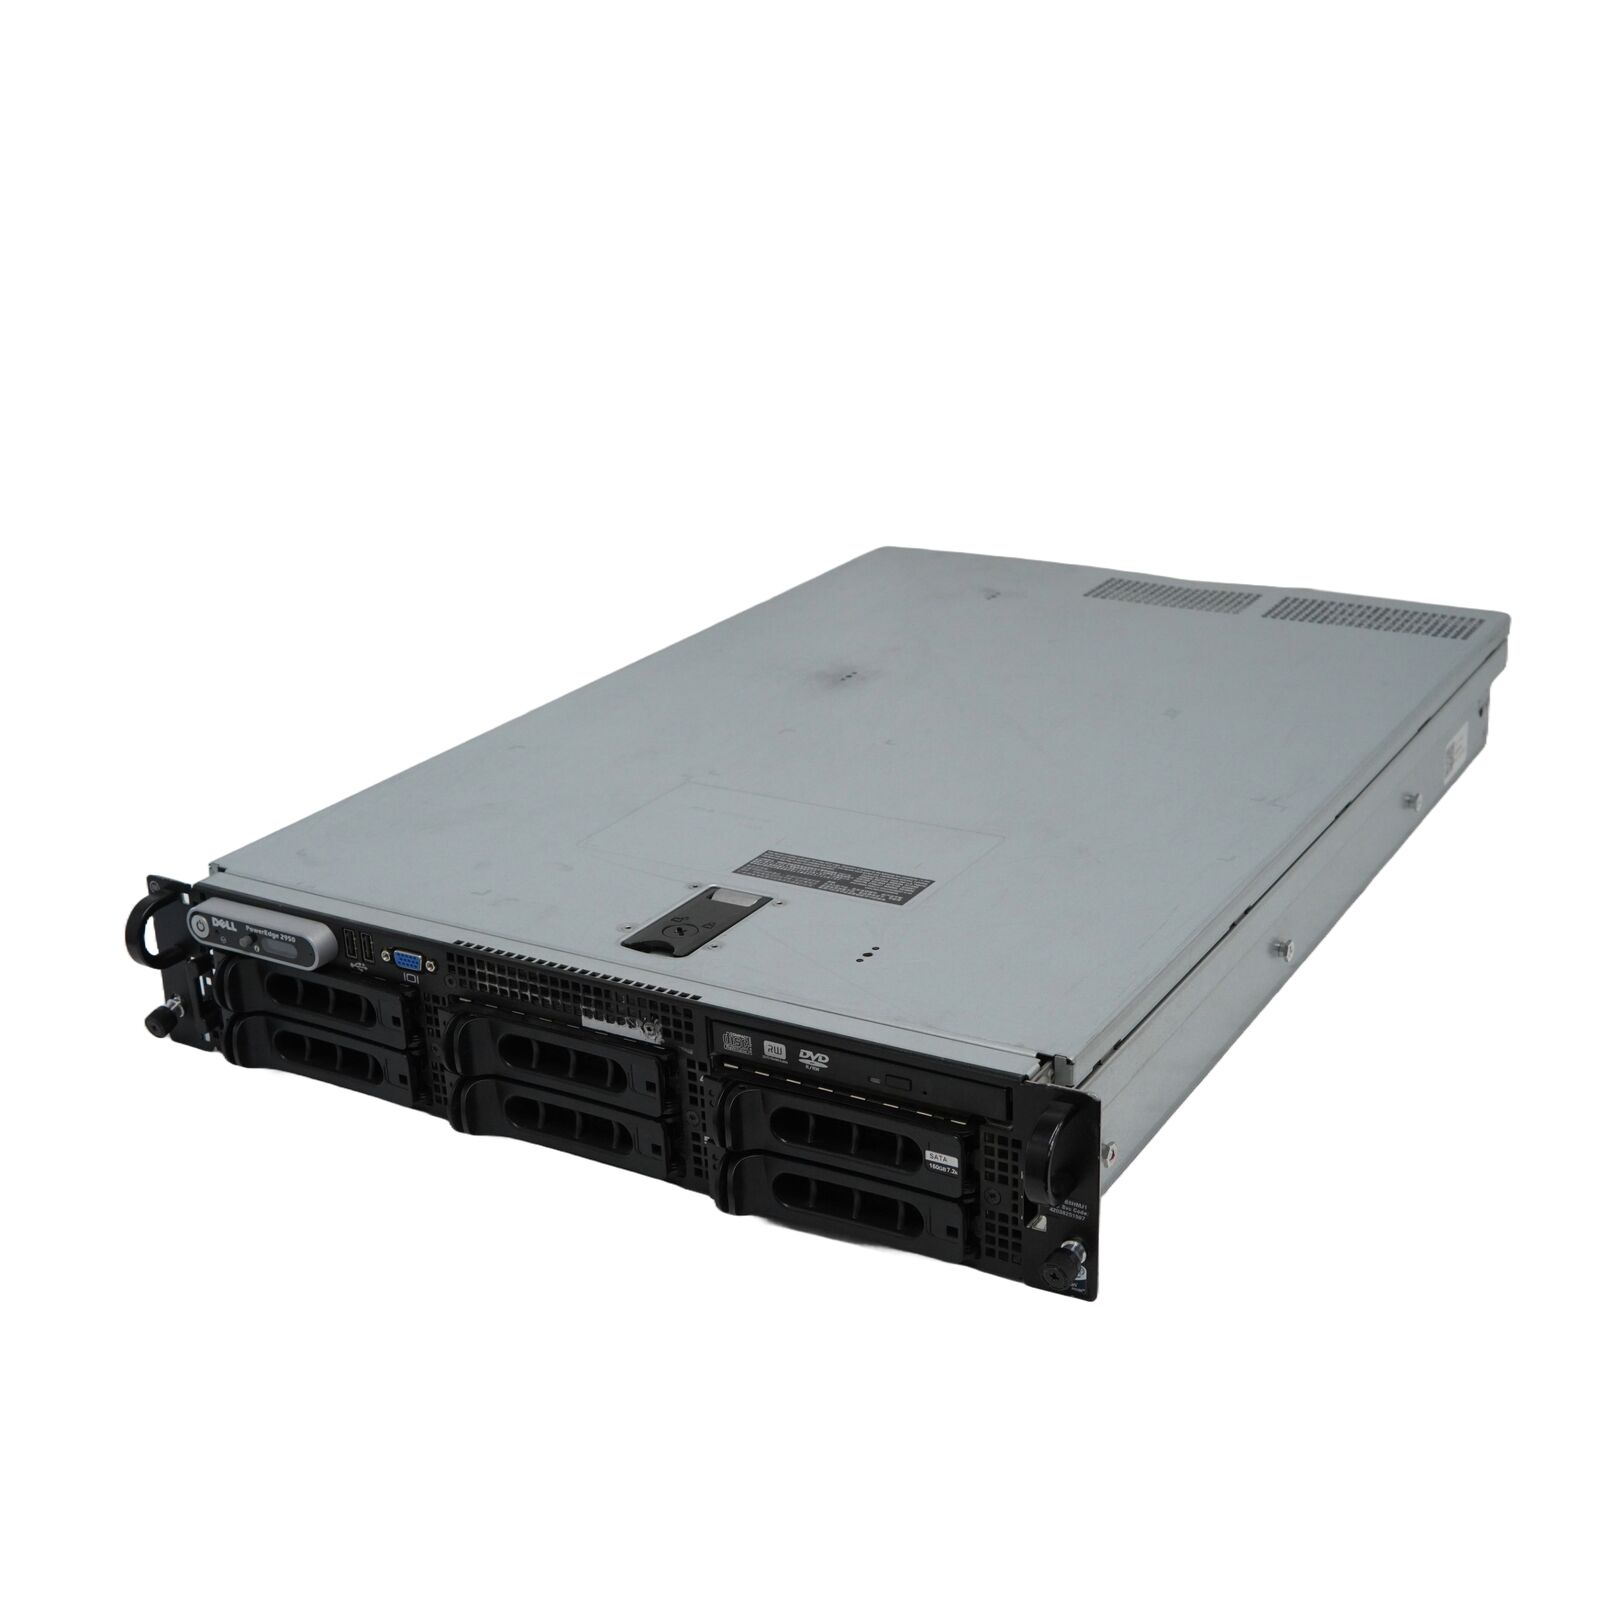 Dell PowerEdge 2950 (NO HDD) - (2x) Quad Core Xeon X5365 (3.0GHz), 16GB RAM